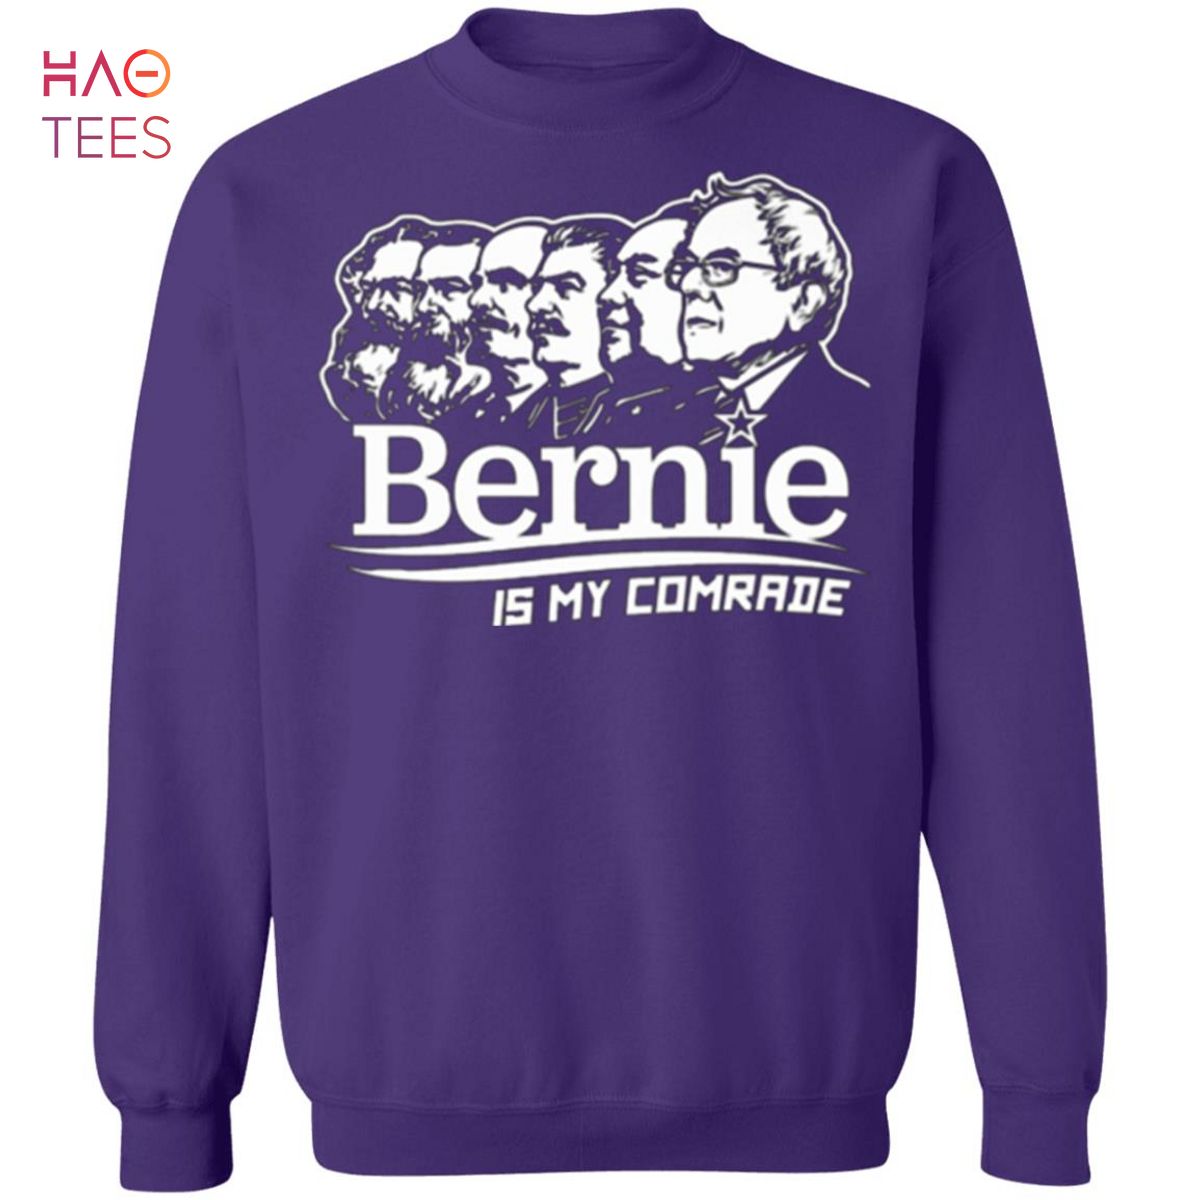 BEST Bernie Sanders Communist Sweater